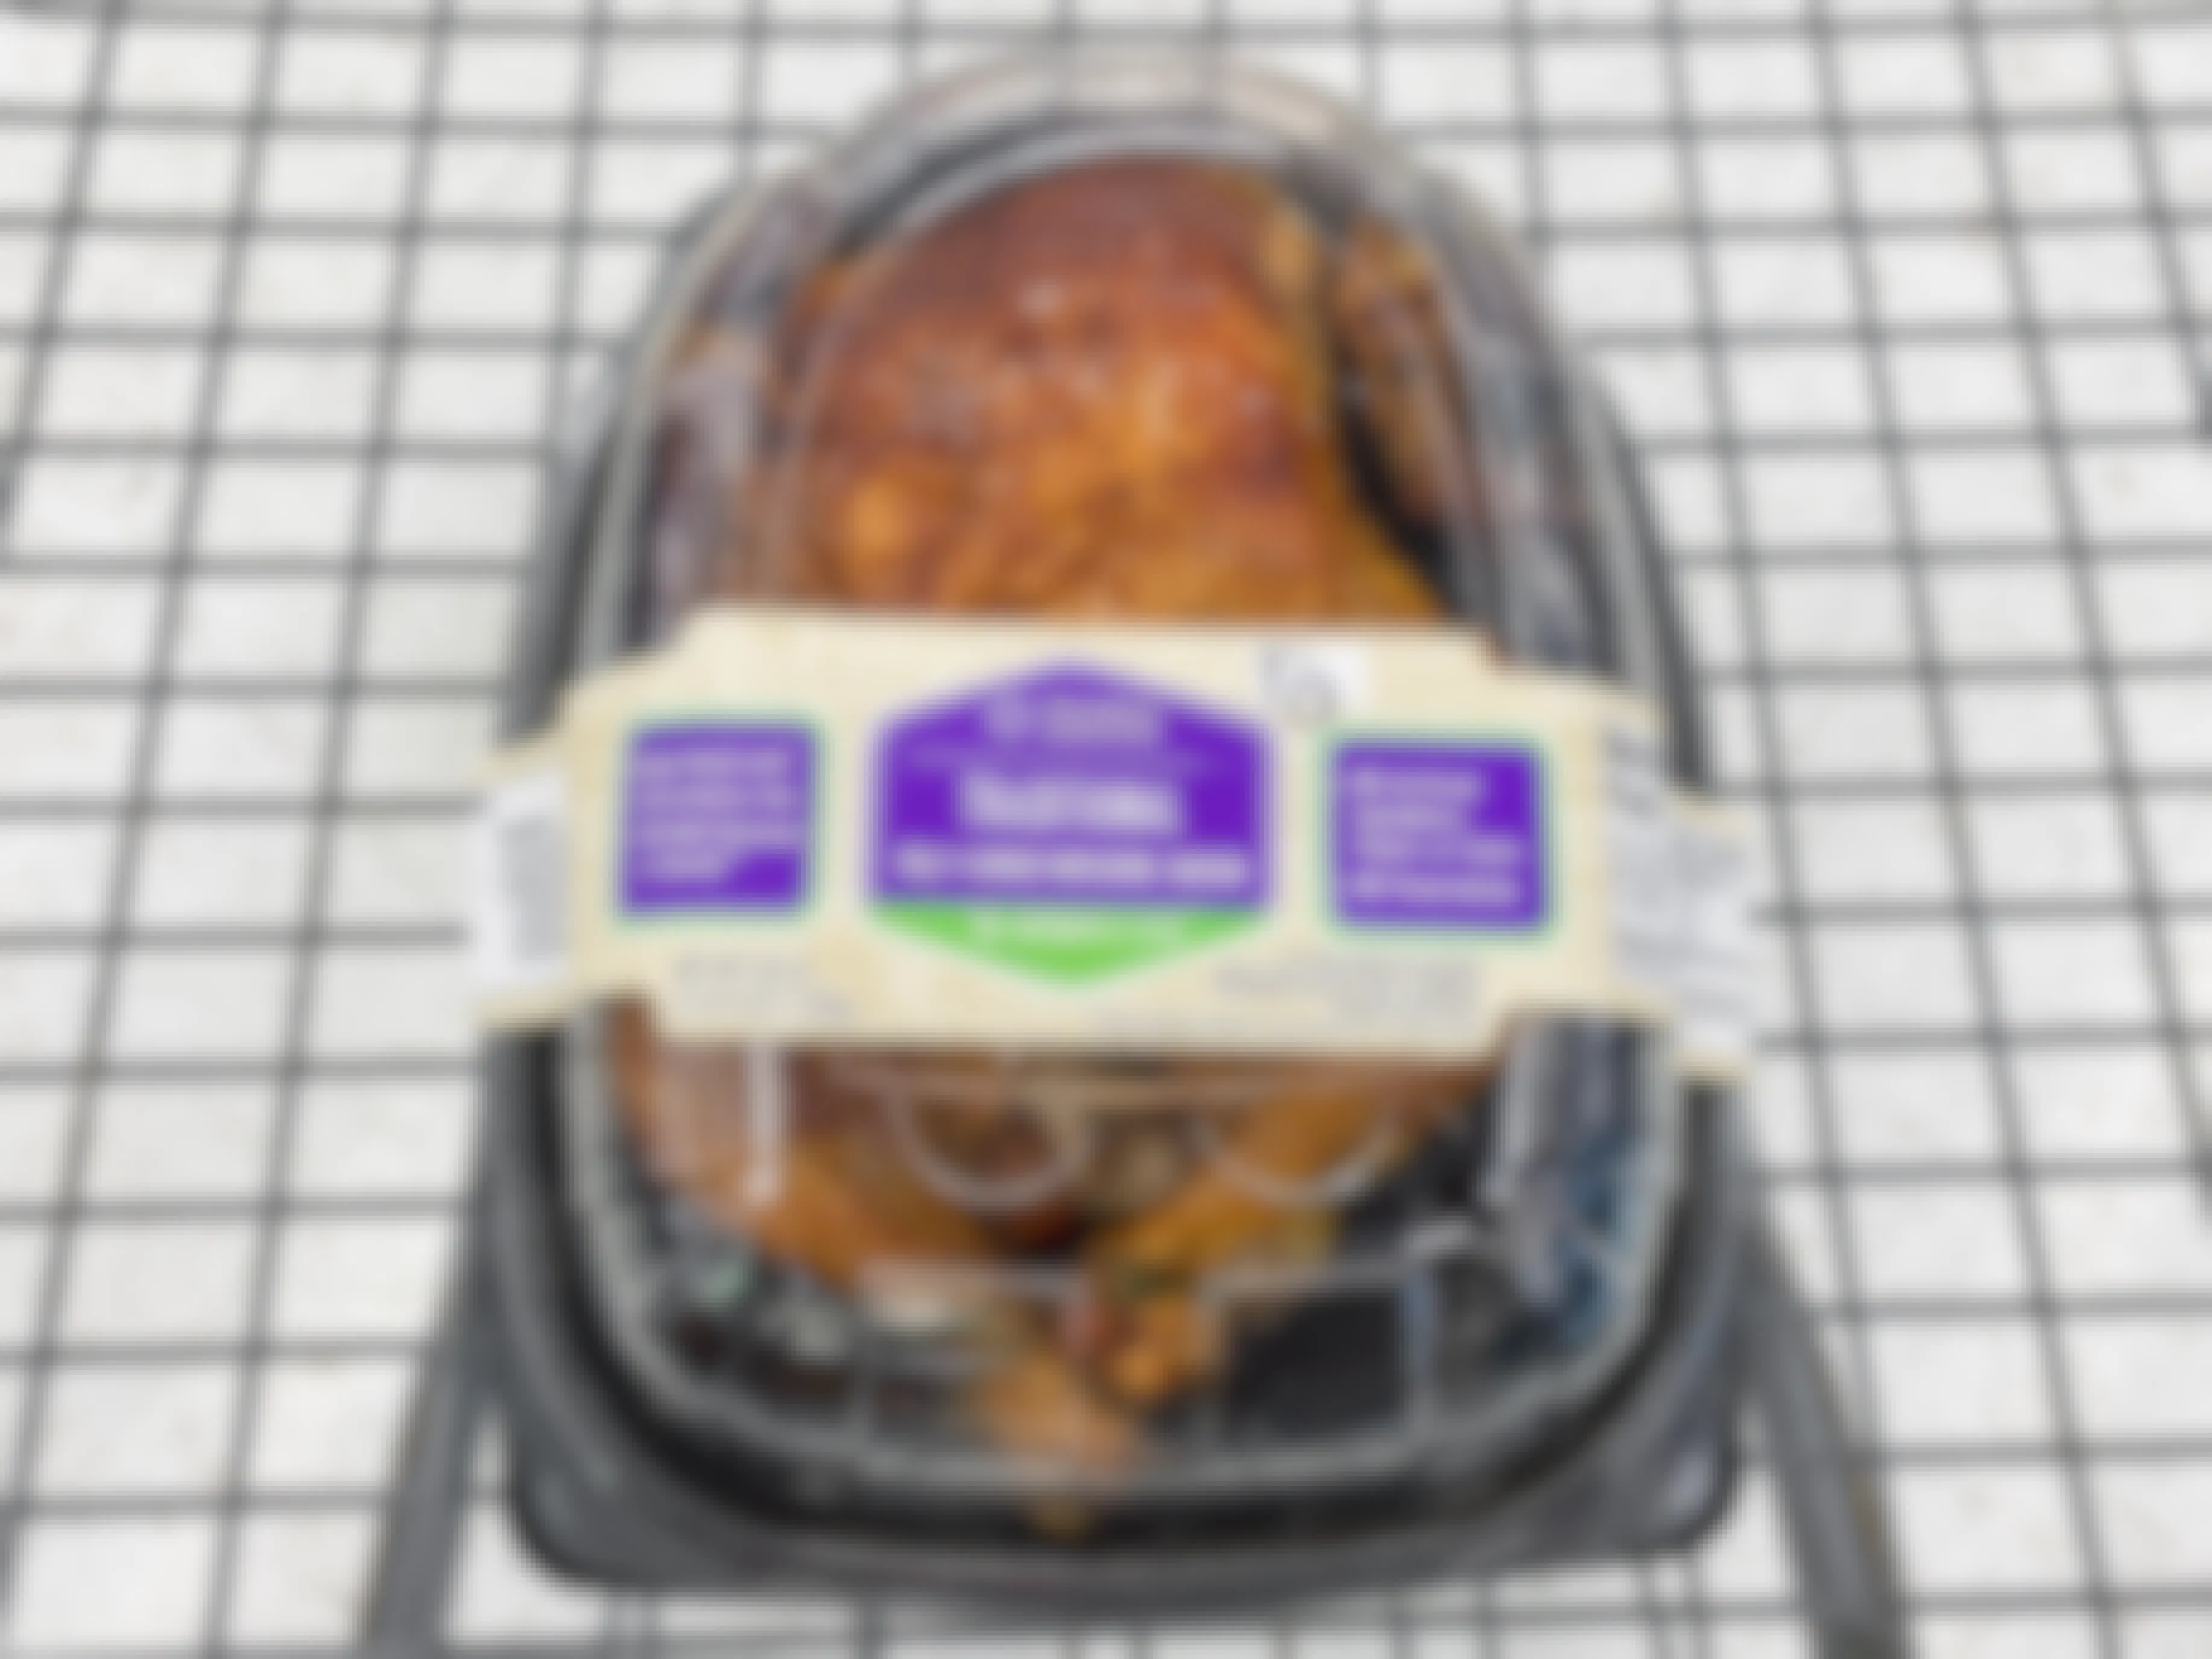 Walmart rotisserie chicken in a shopping cart.